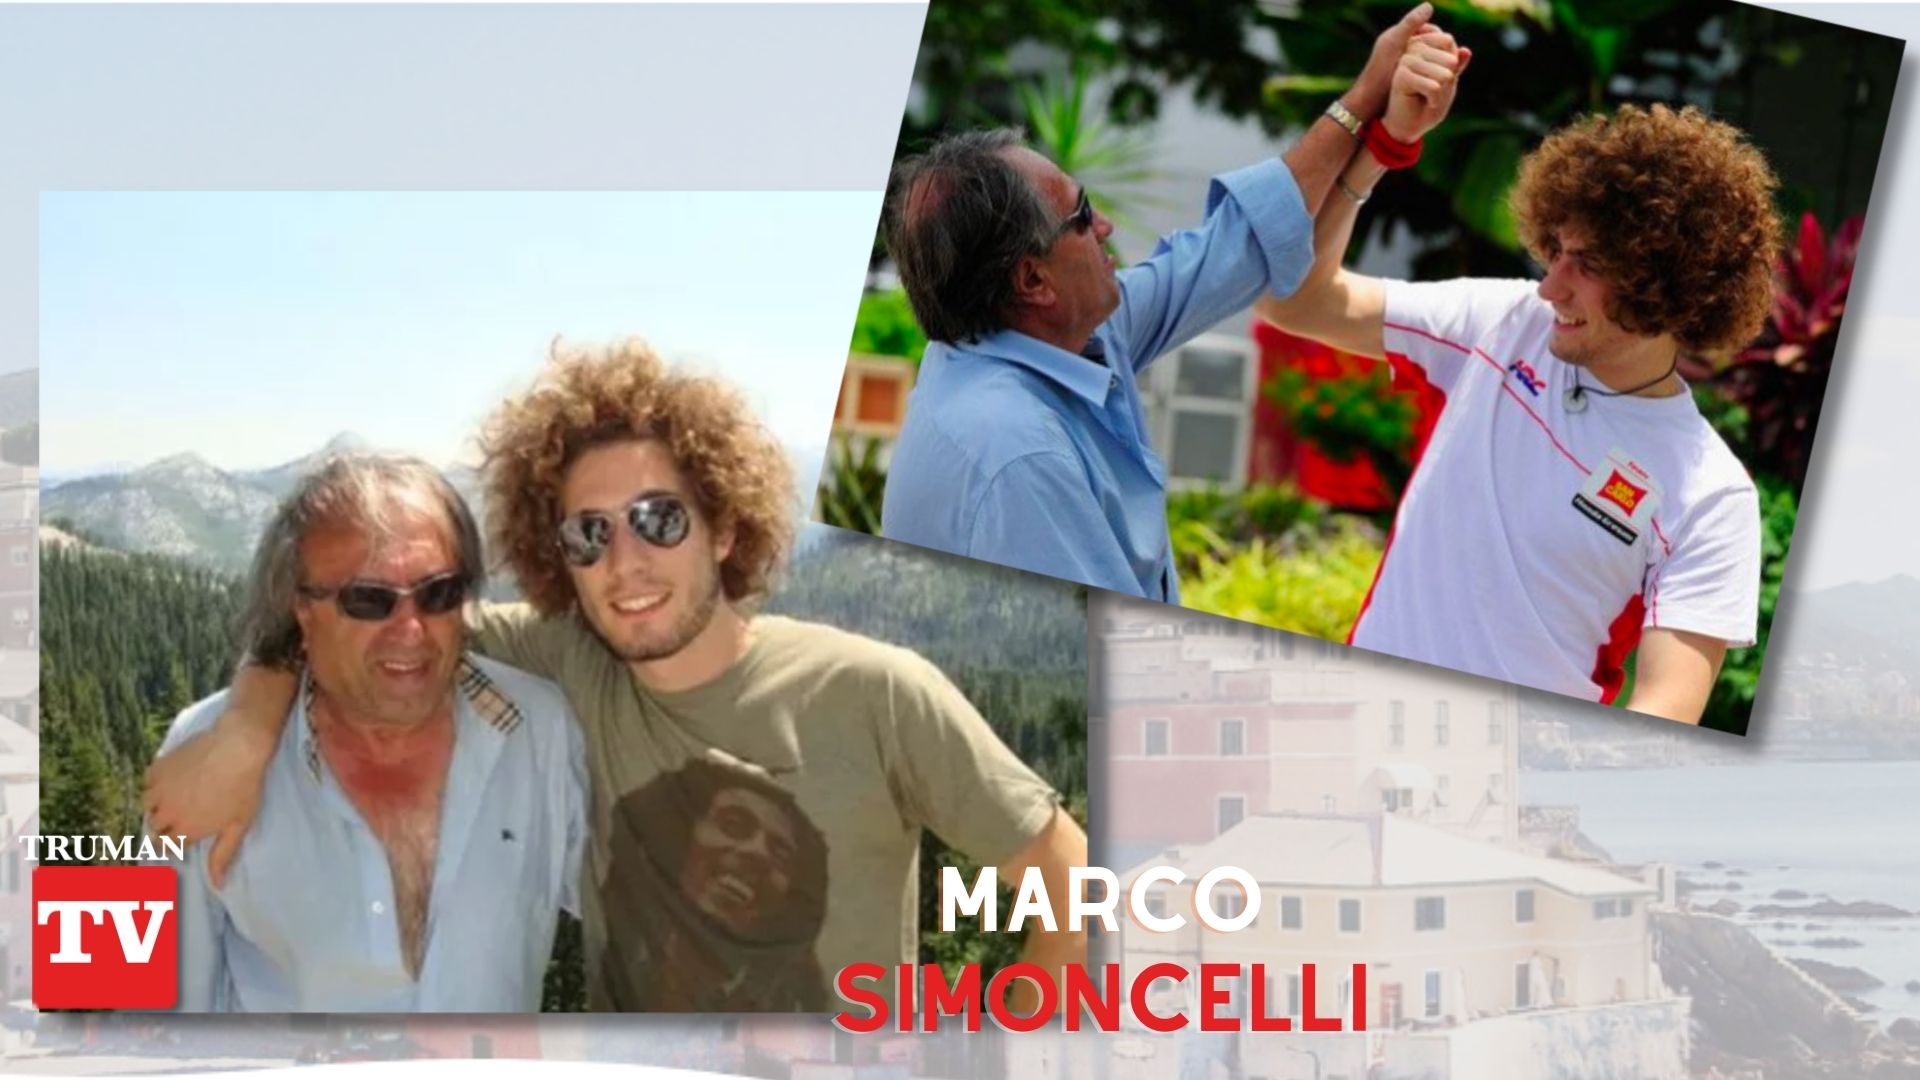 Marco Simoncelli carlo Pernat truman TV montepilli comm2